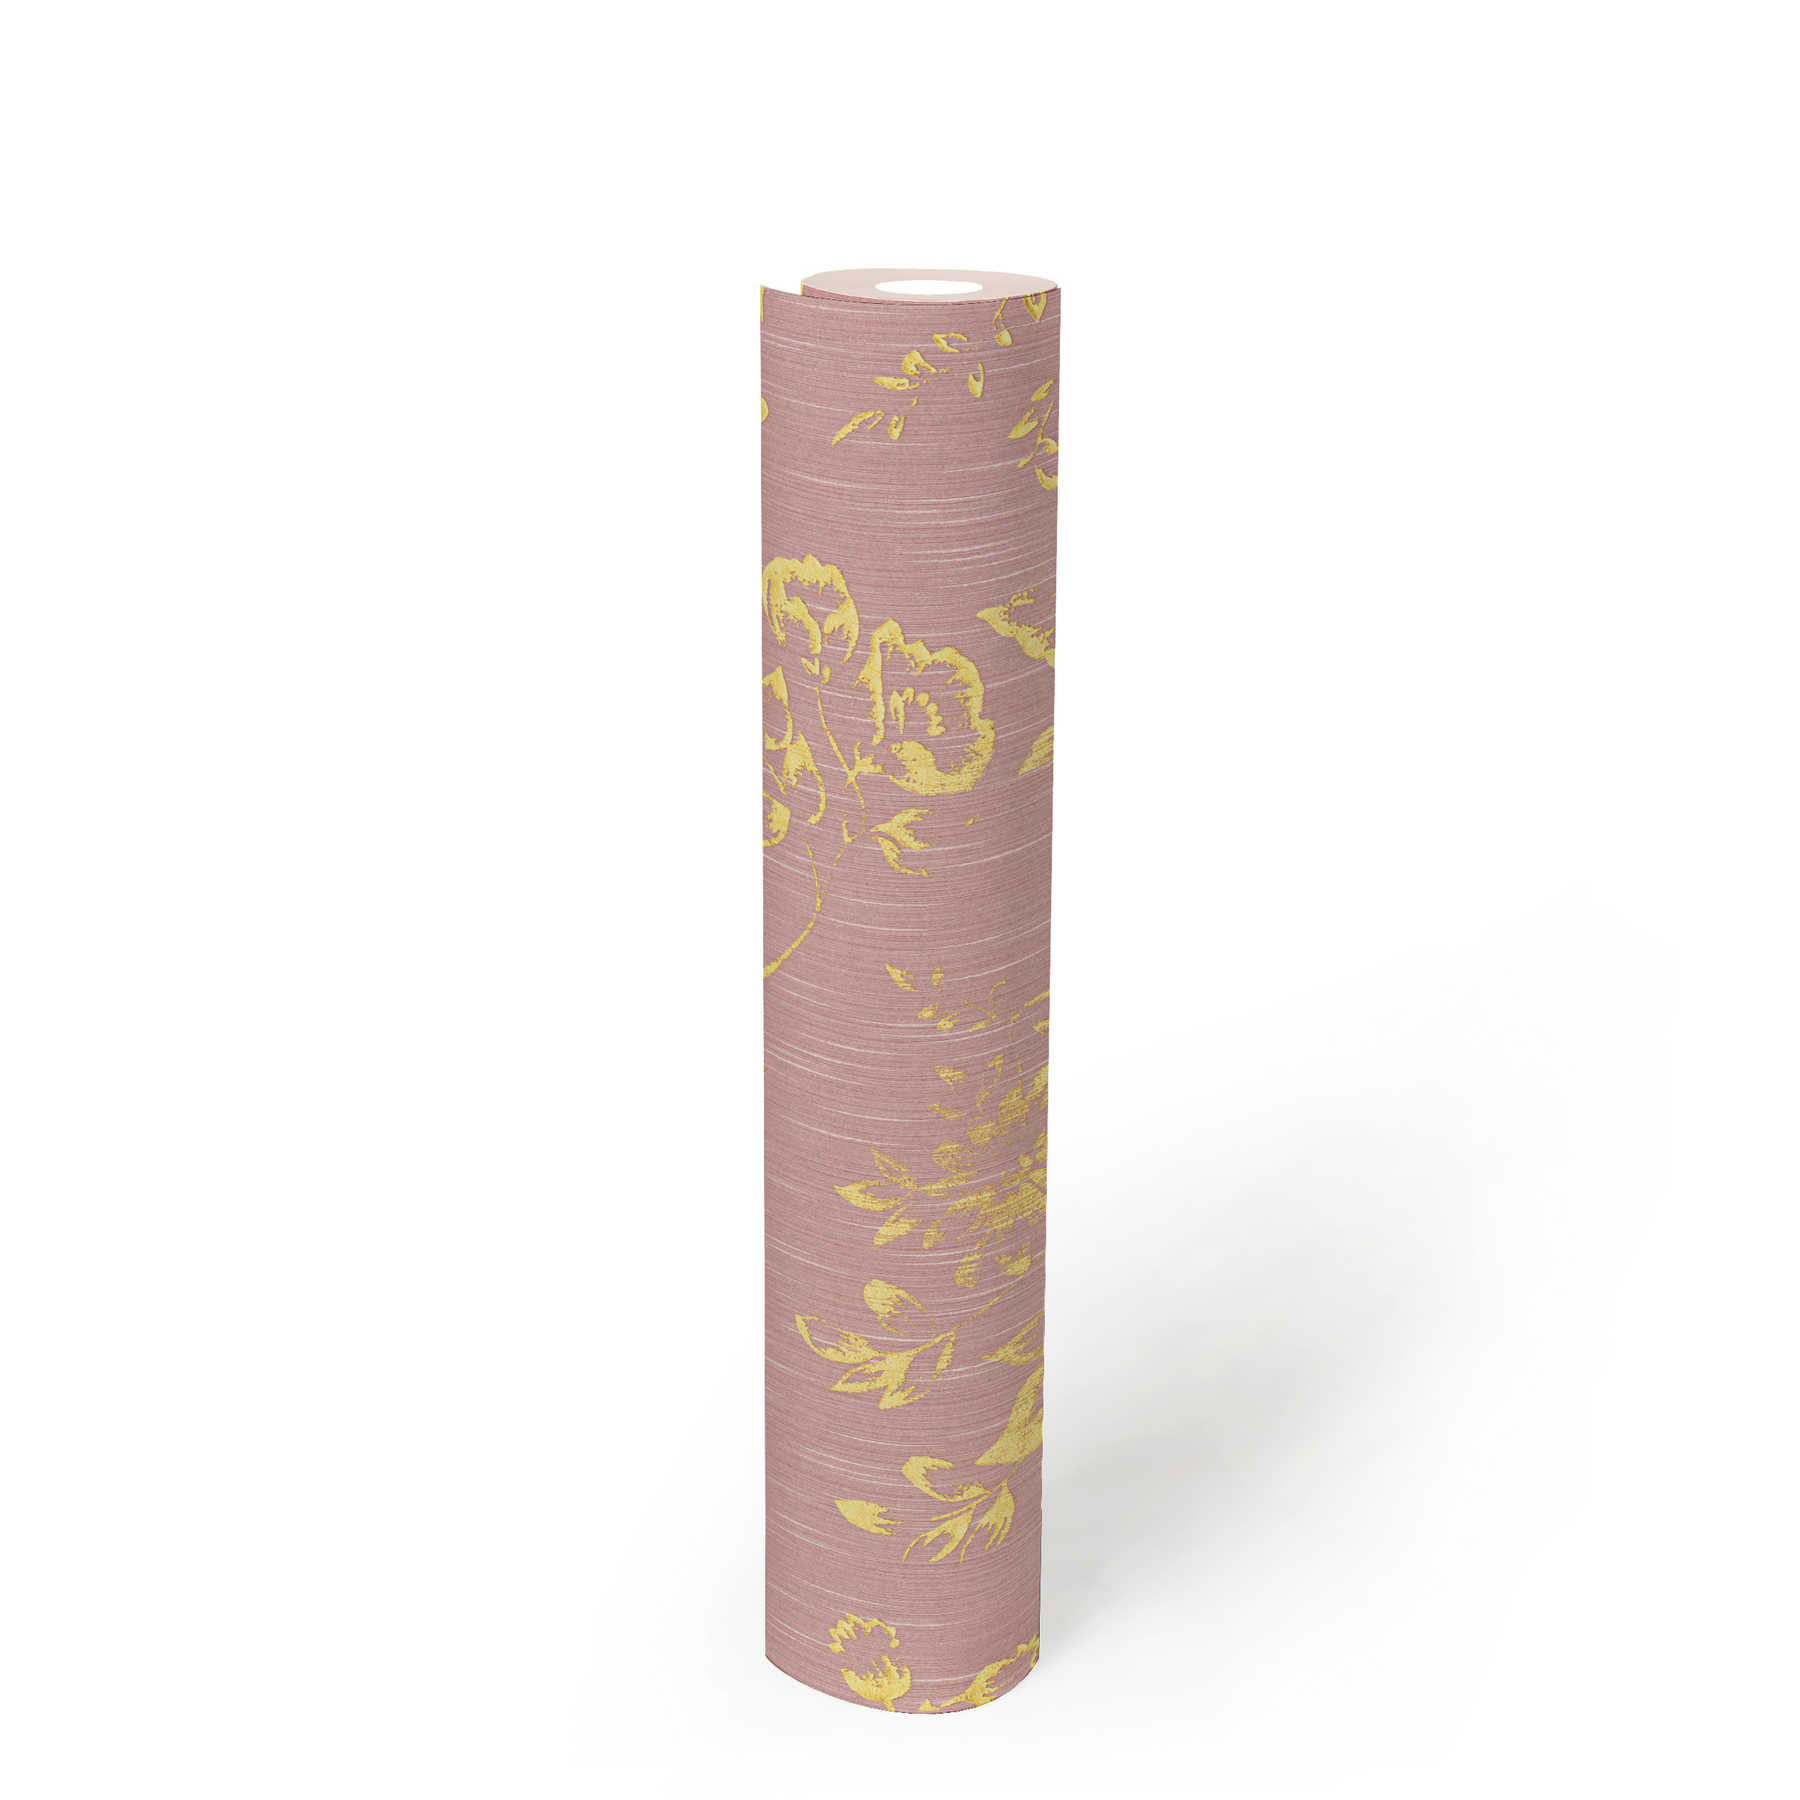             Strukturtapete mit goldenem Blütenmuster – Gold, Rosa
        